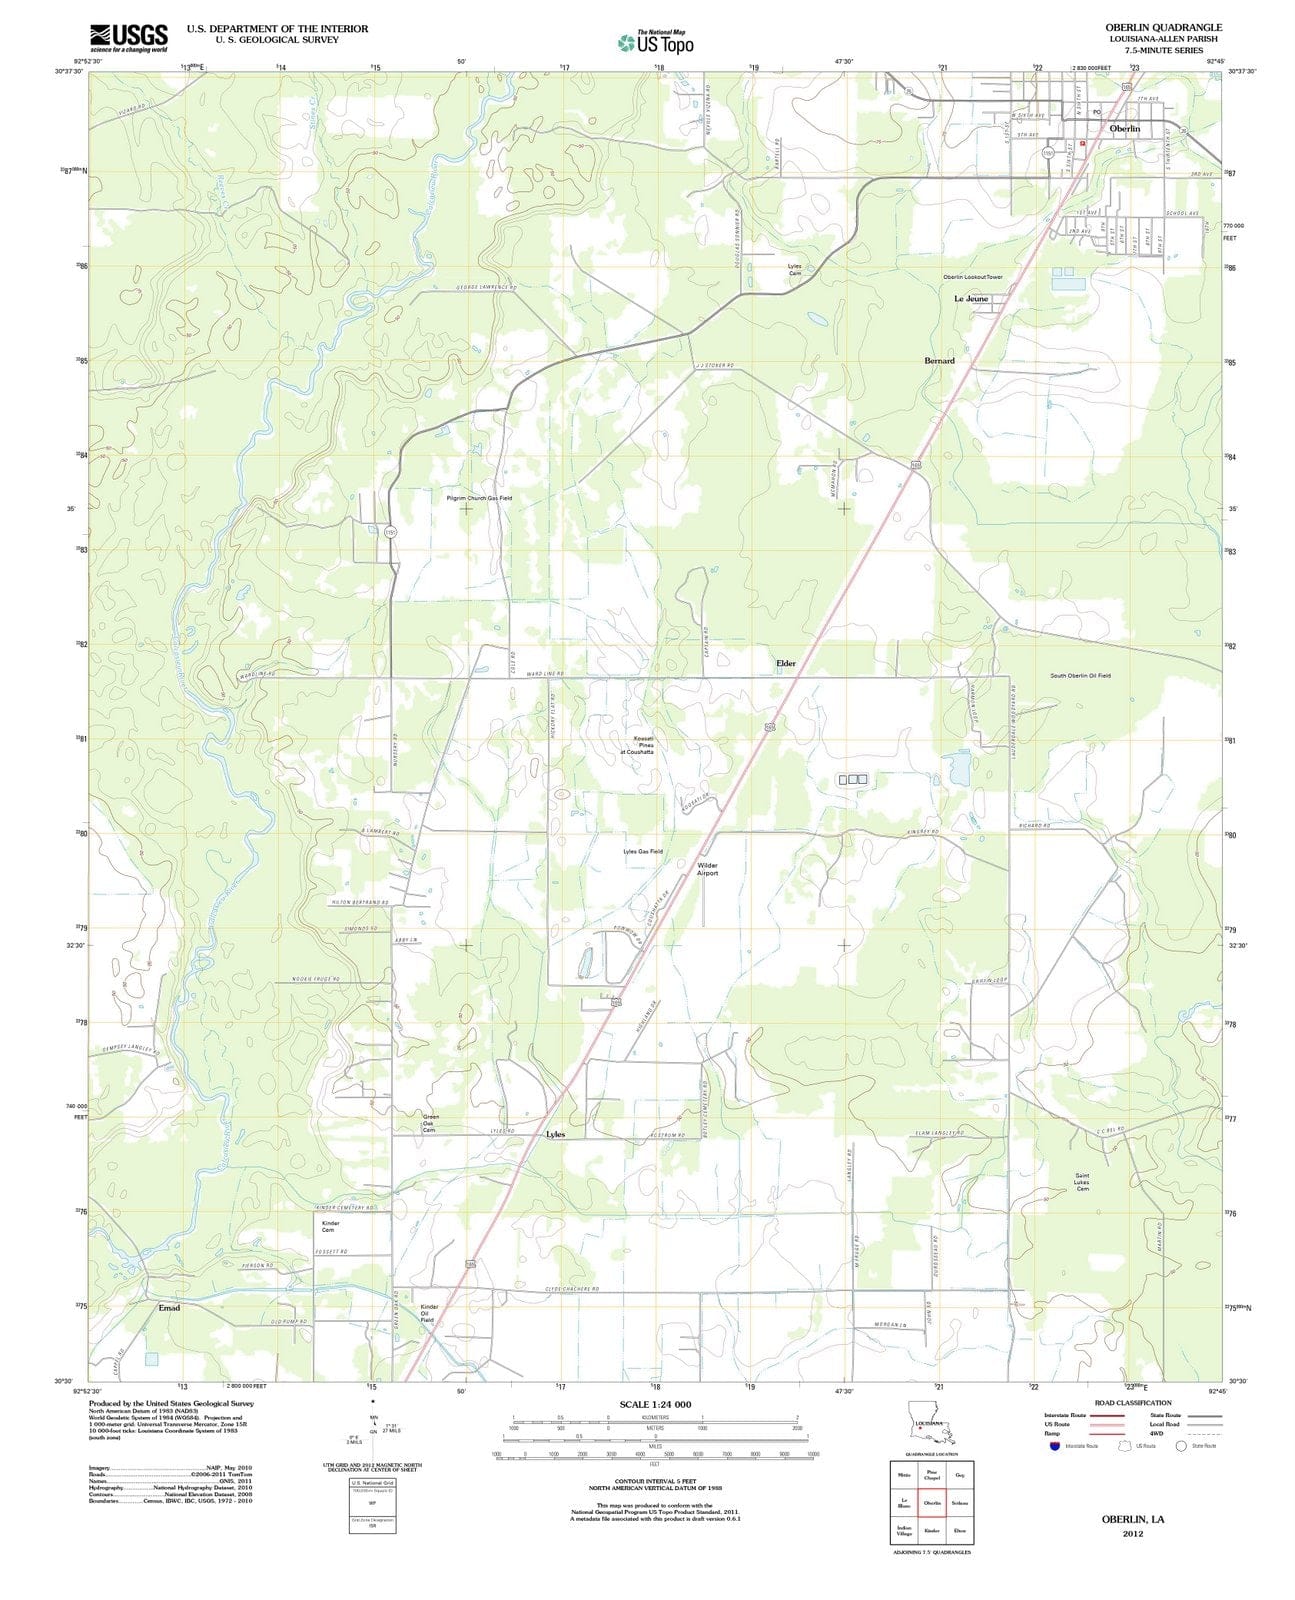 2012 Oberlin, LA - Louisiana - USGS Topographic Map